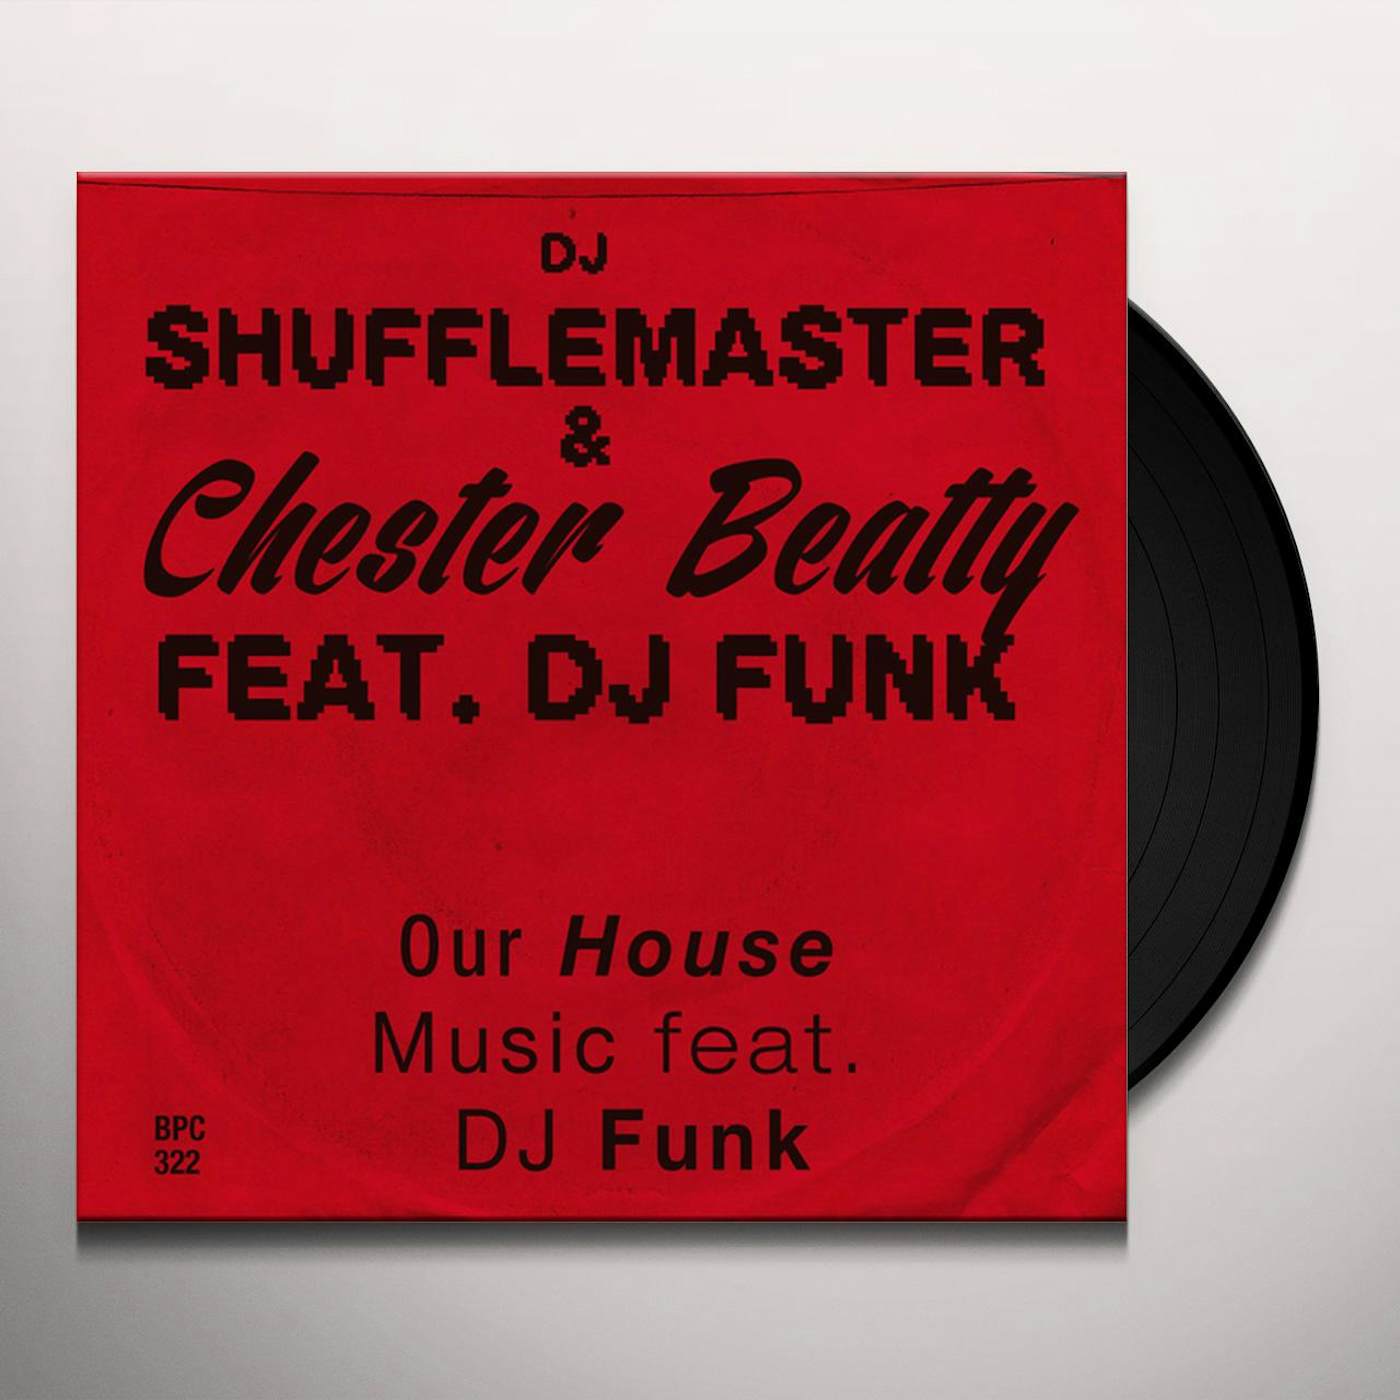 Dj Shufflemaster & Chester Beatty OUR HOUSE MUSIC FEAT. DJ FUNK Vinyl Record